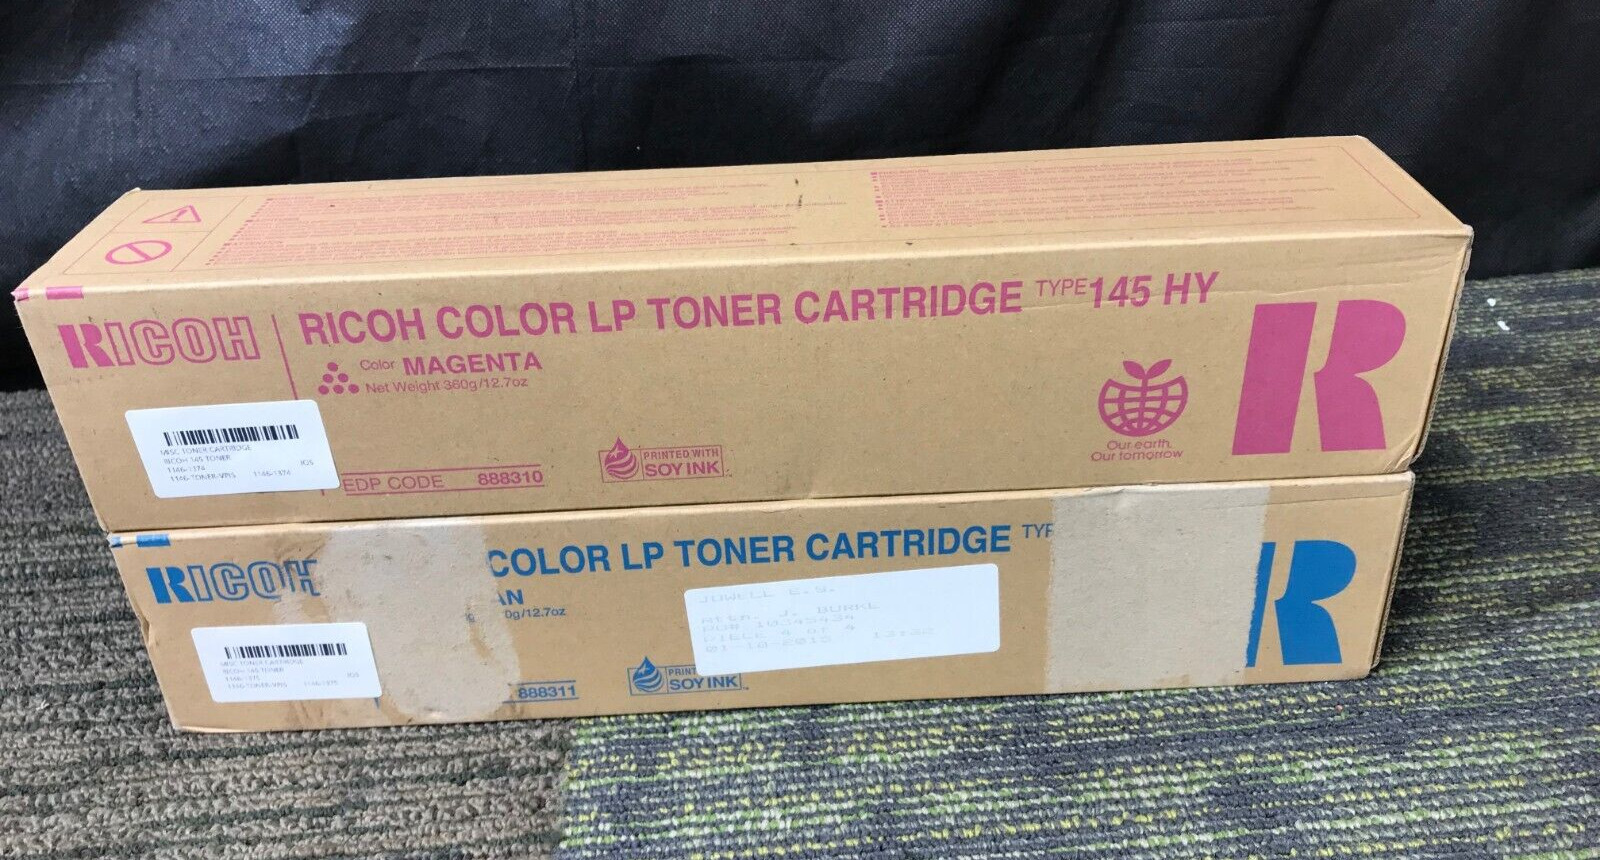 (LOT OF 2) Ricoh Savin Lanier MAGENTA/CYAN Color LP Toner Cartridge Type 145 HY